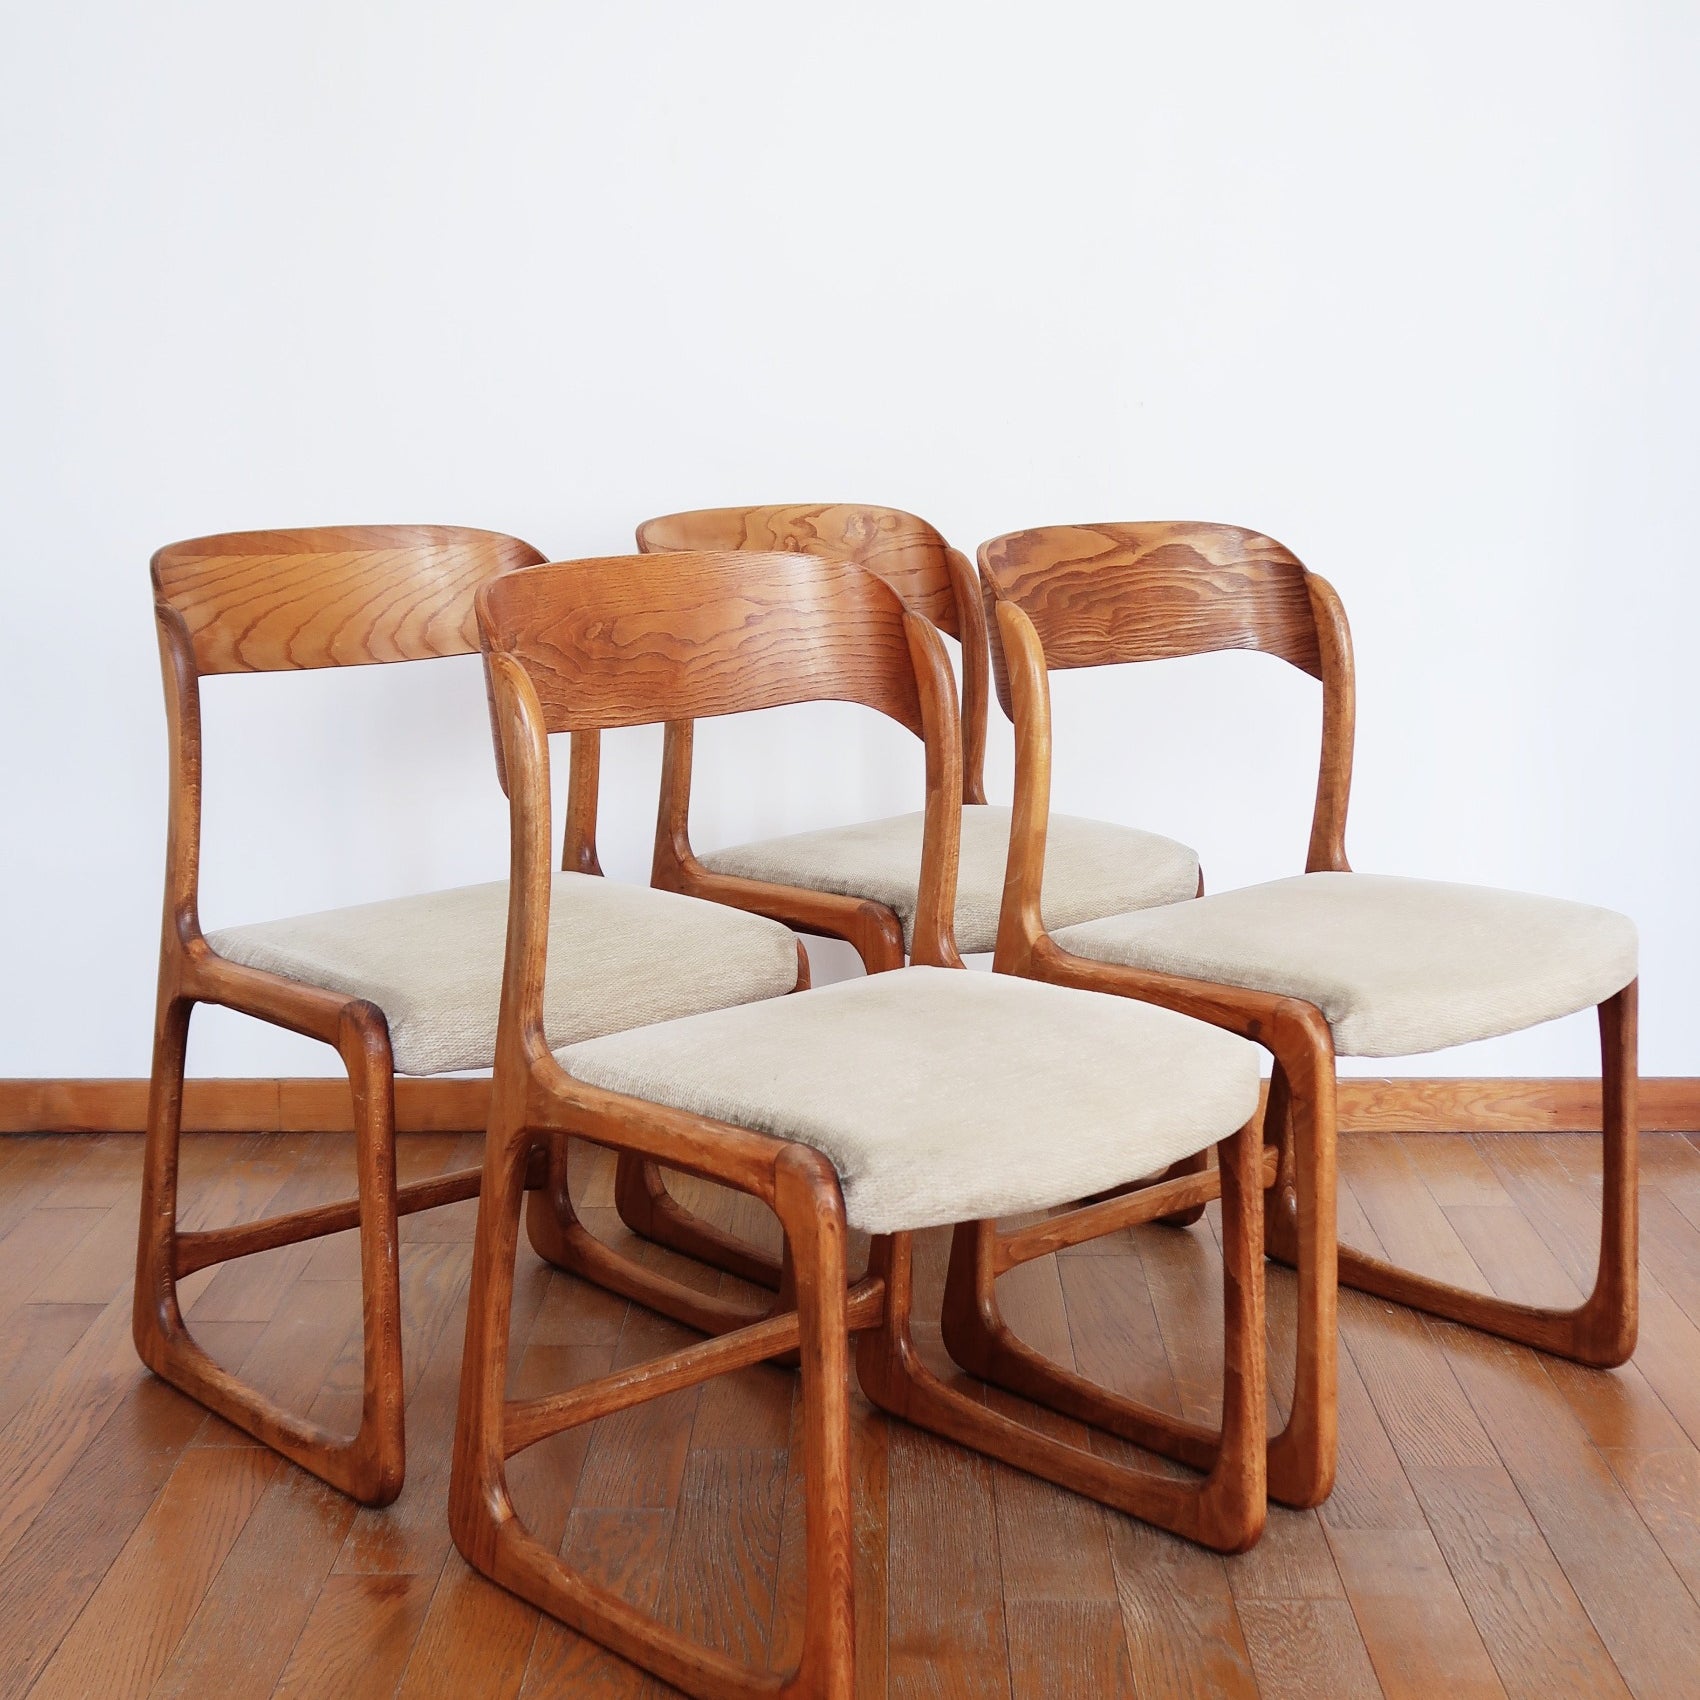 chaise traineau vintage baumann teck palissandre tissu beige bois scandinave danois brocante